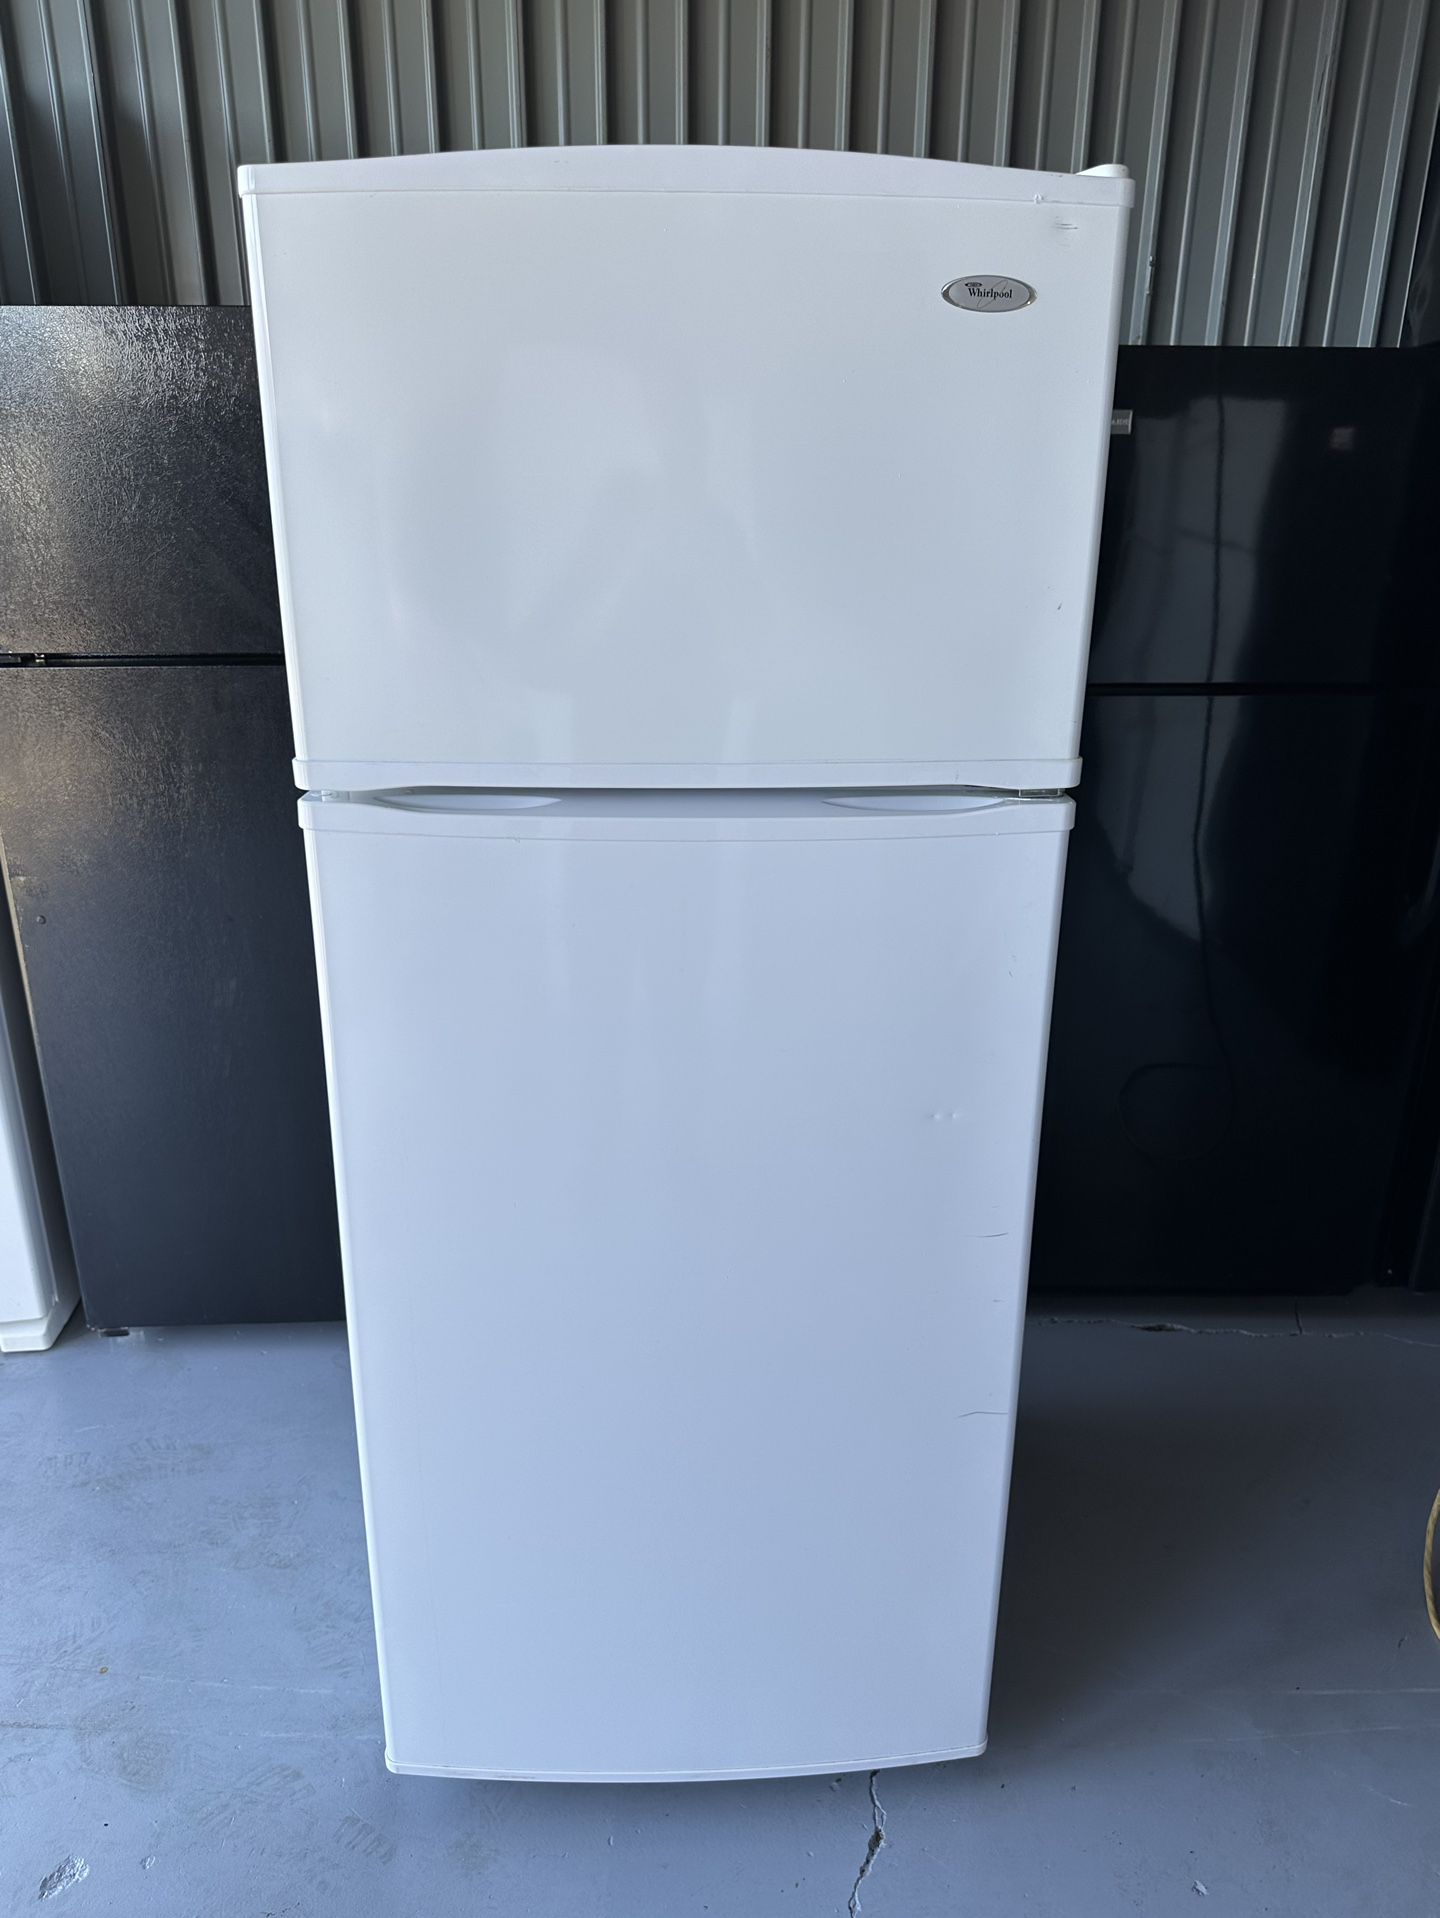 Whirlpool Refrigerator (15 Days Warranty)PENDING PICK UP 